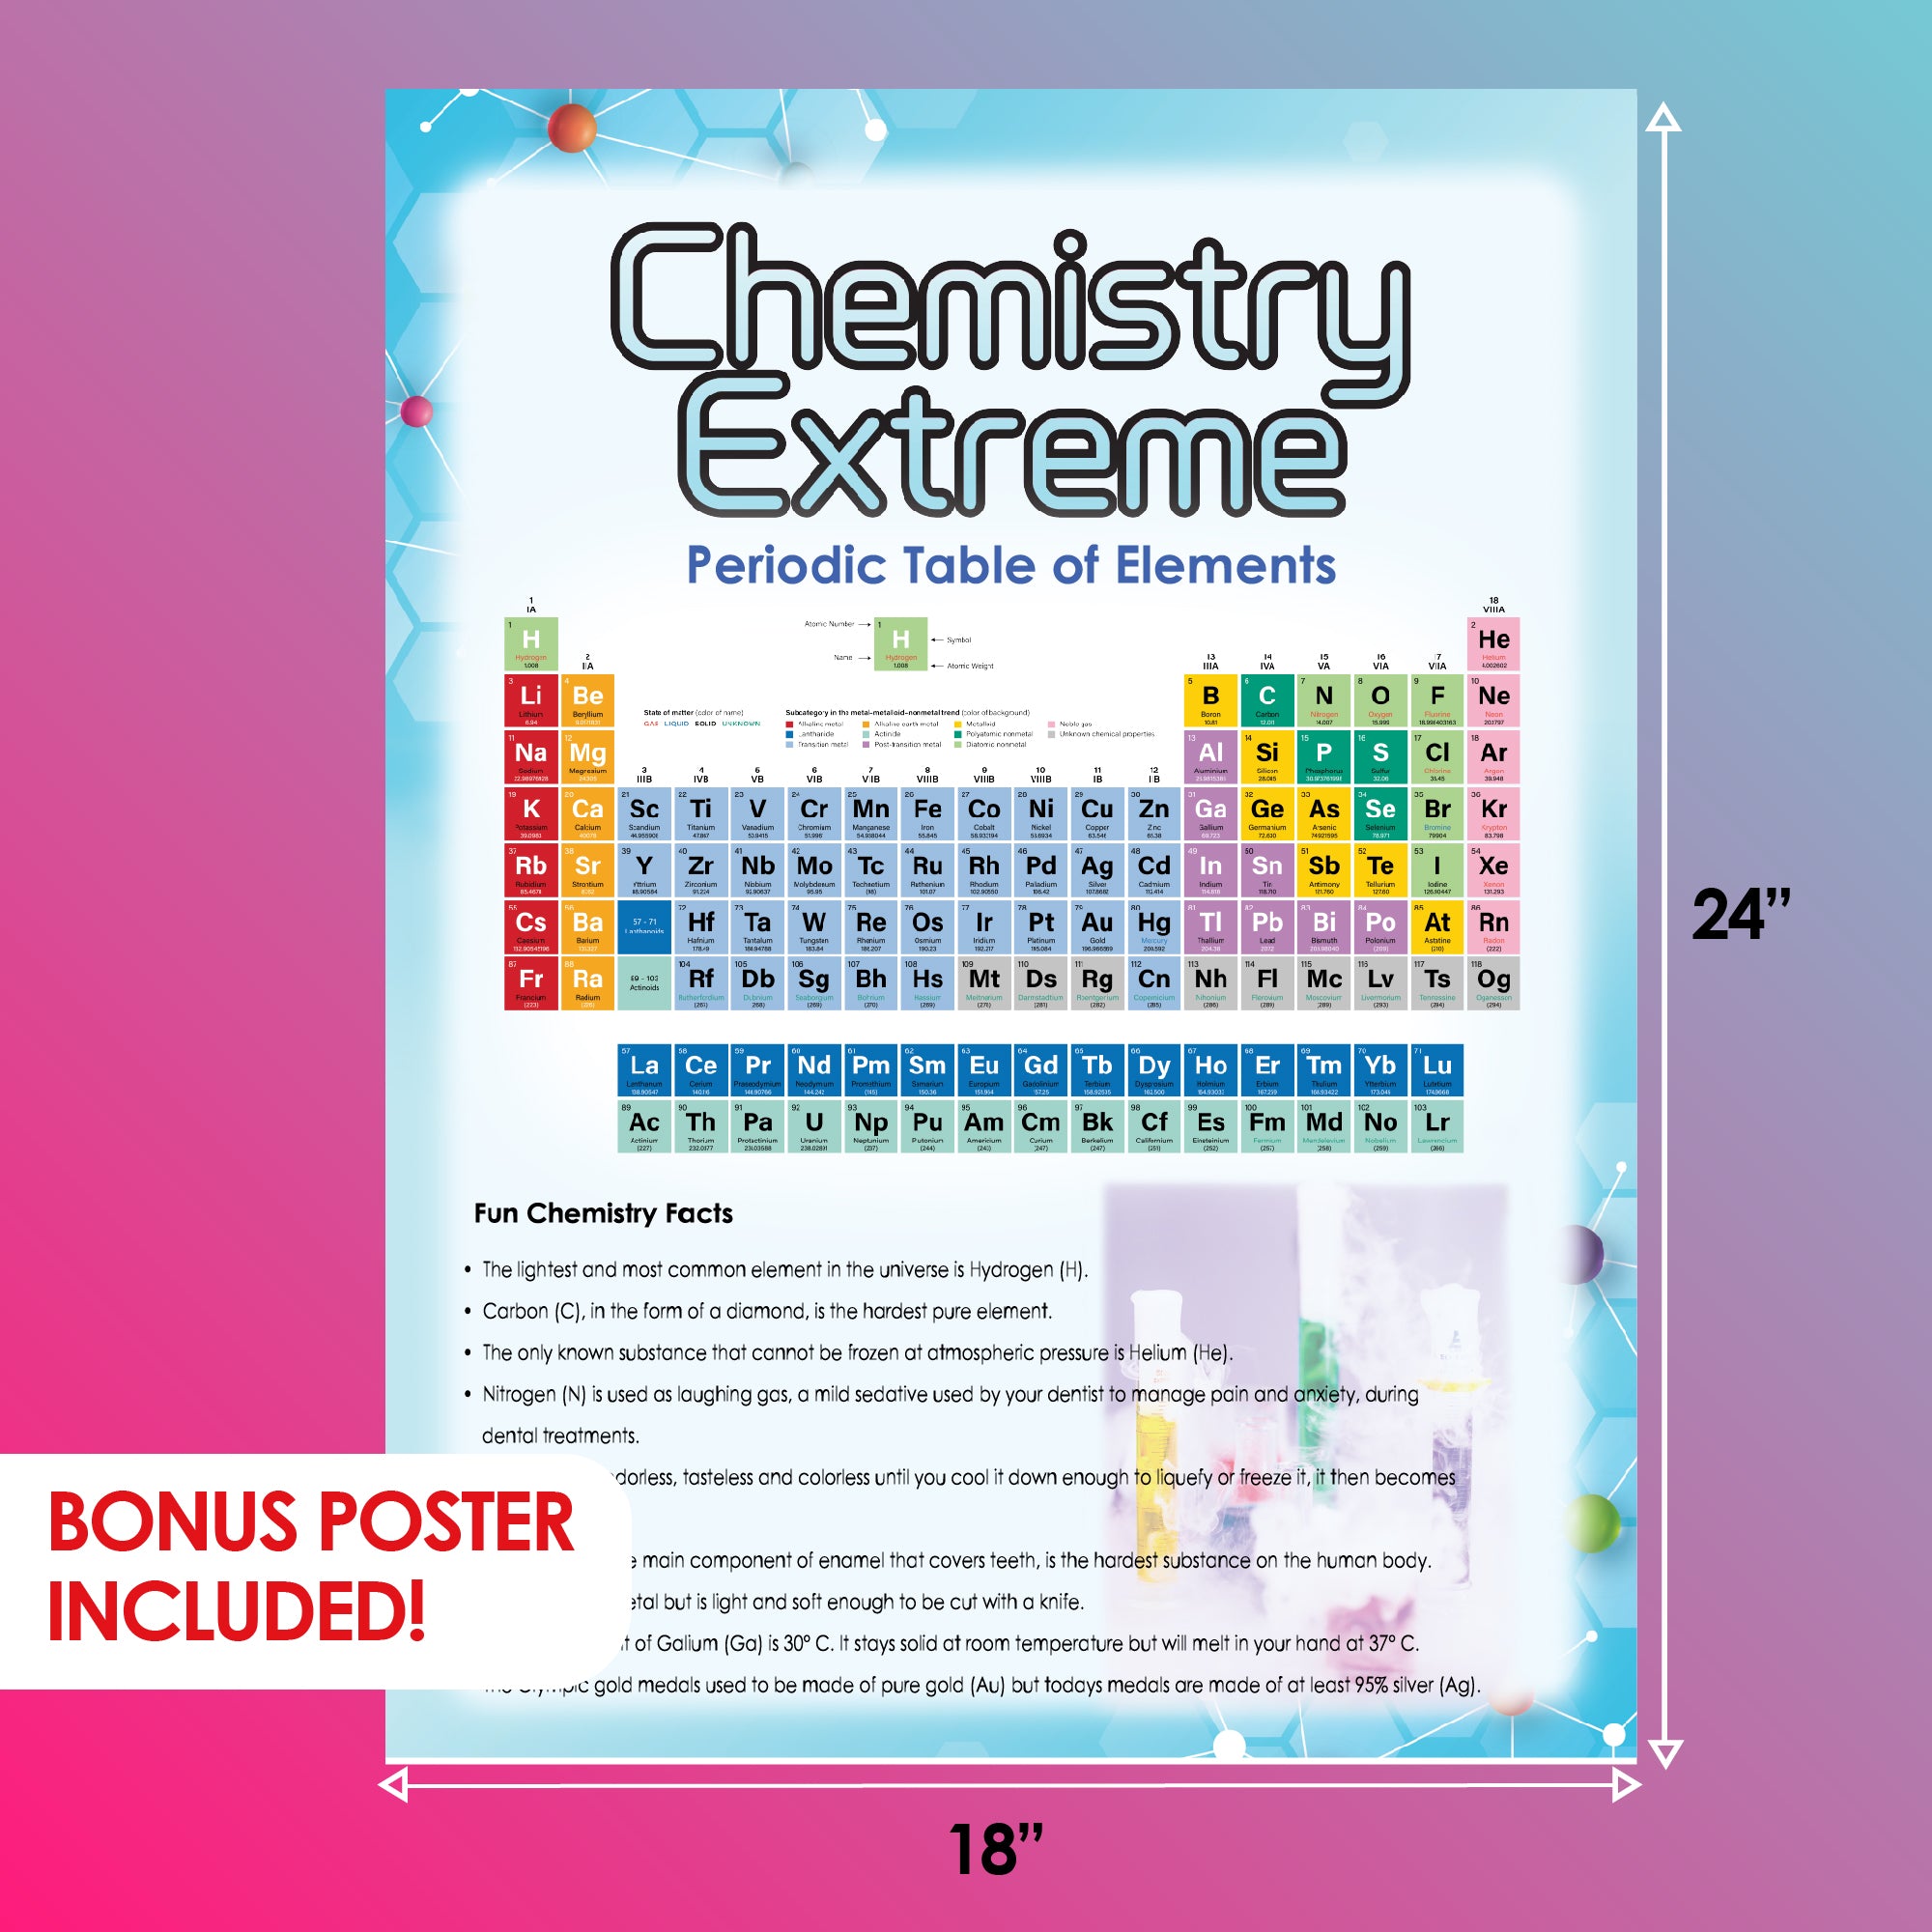 Chemistry Extreme Kit